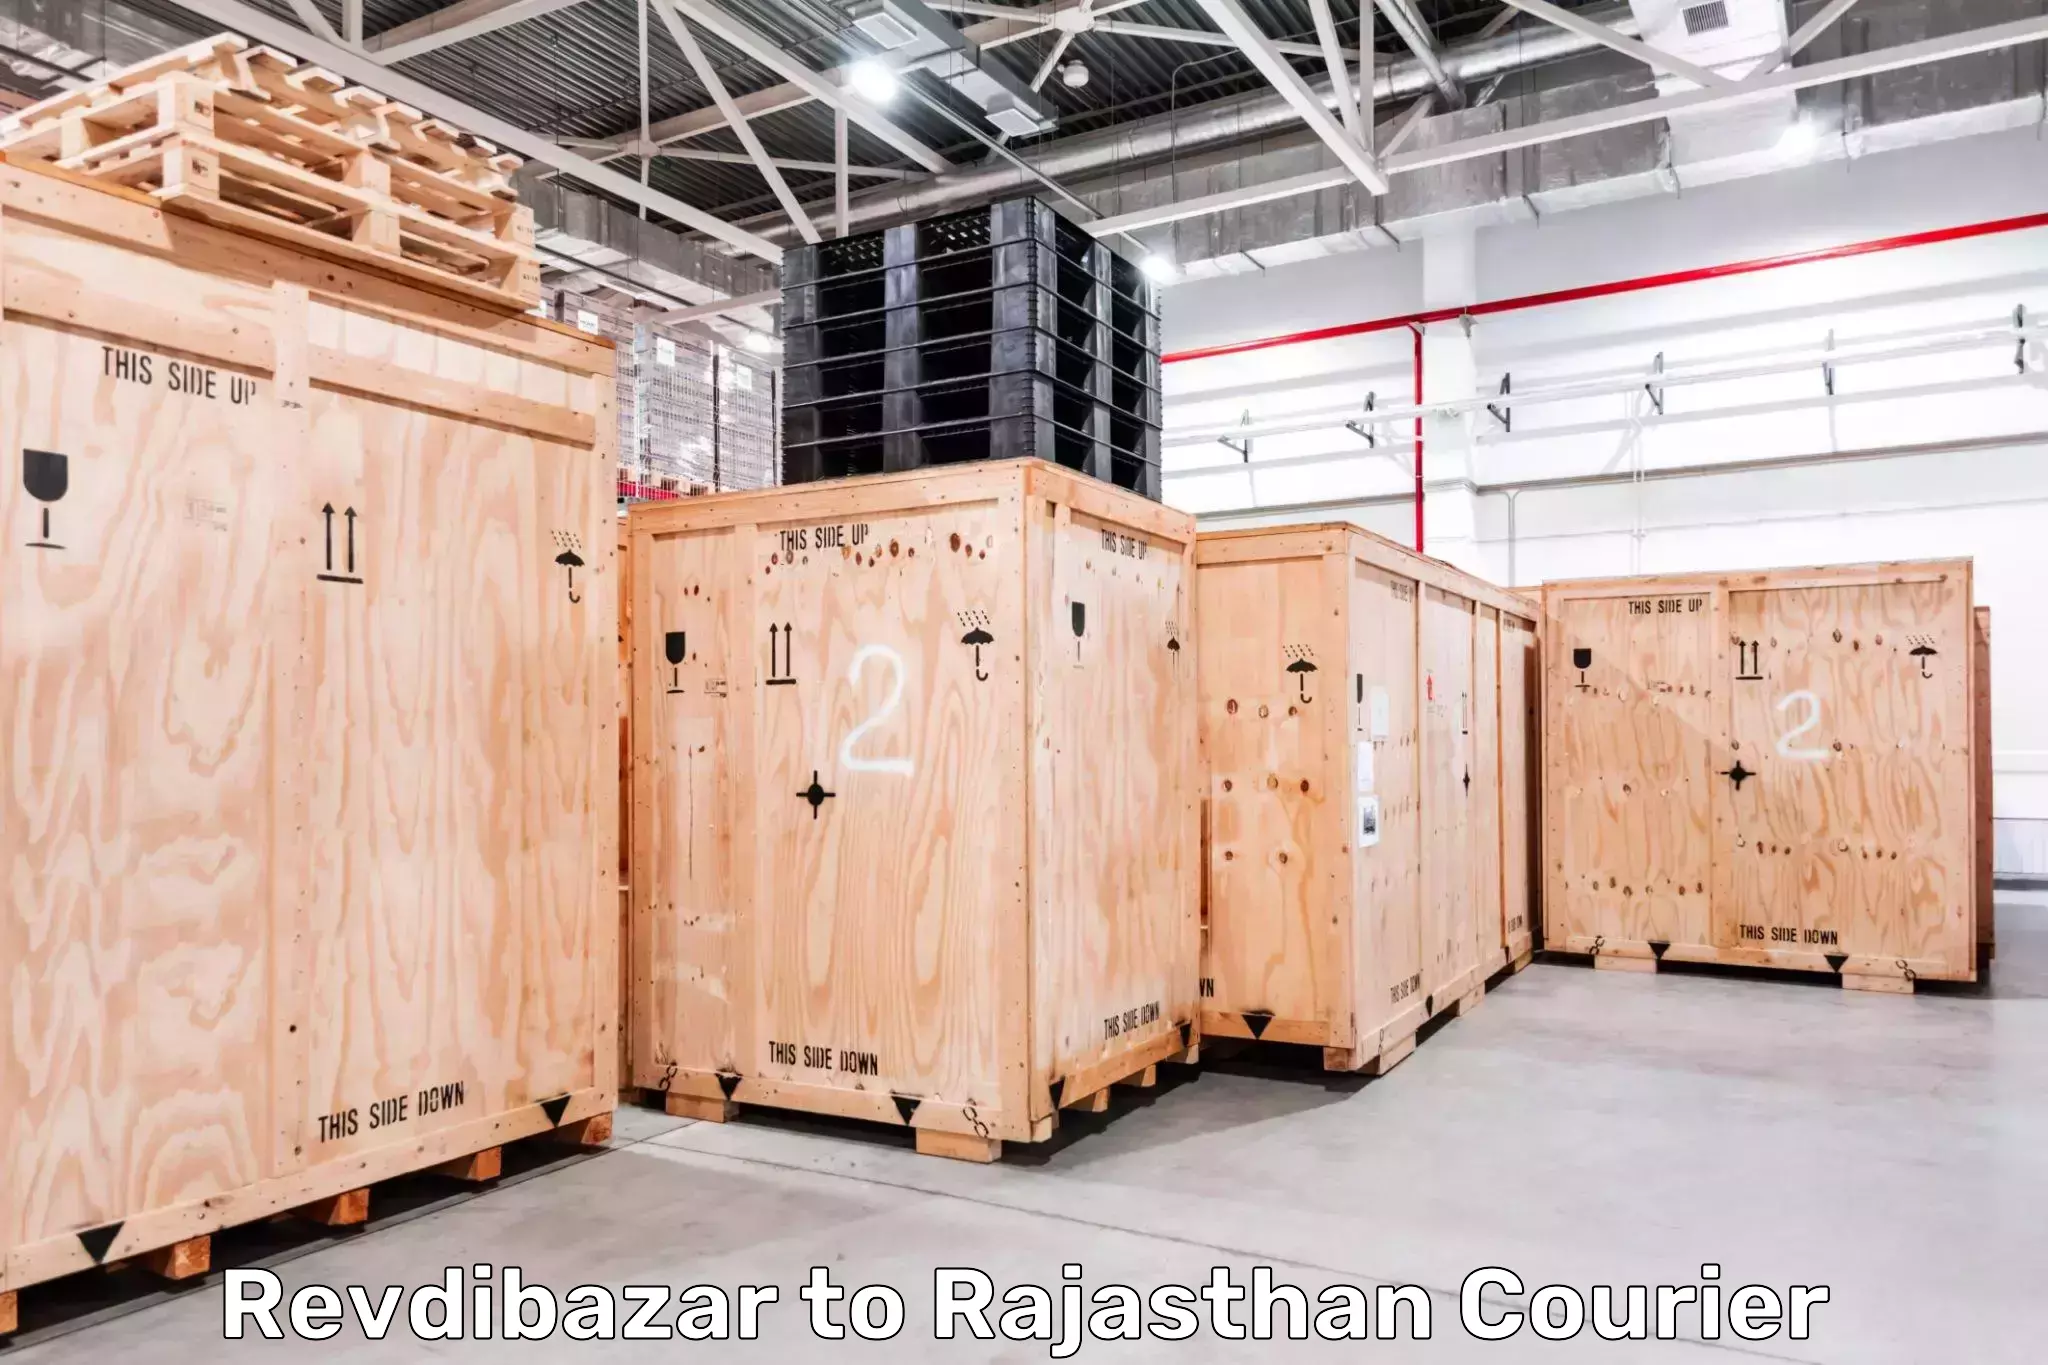 Express courier capabilities Revdibazar to Shrimadhopur